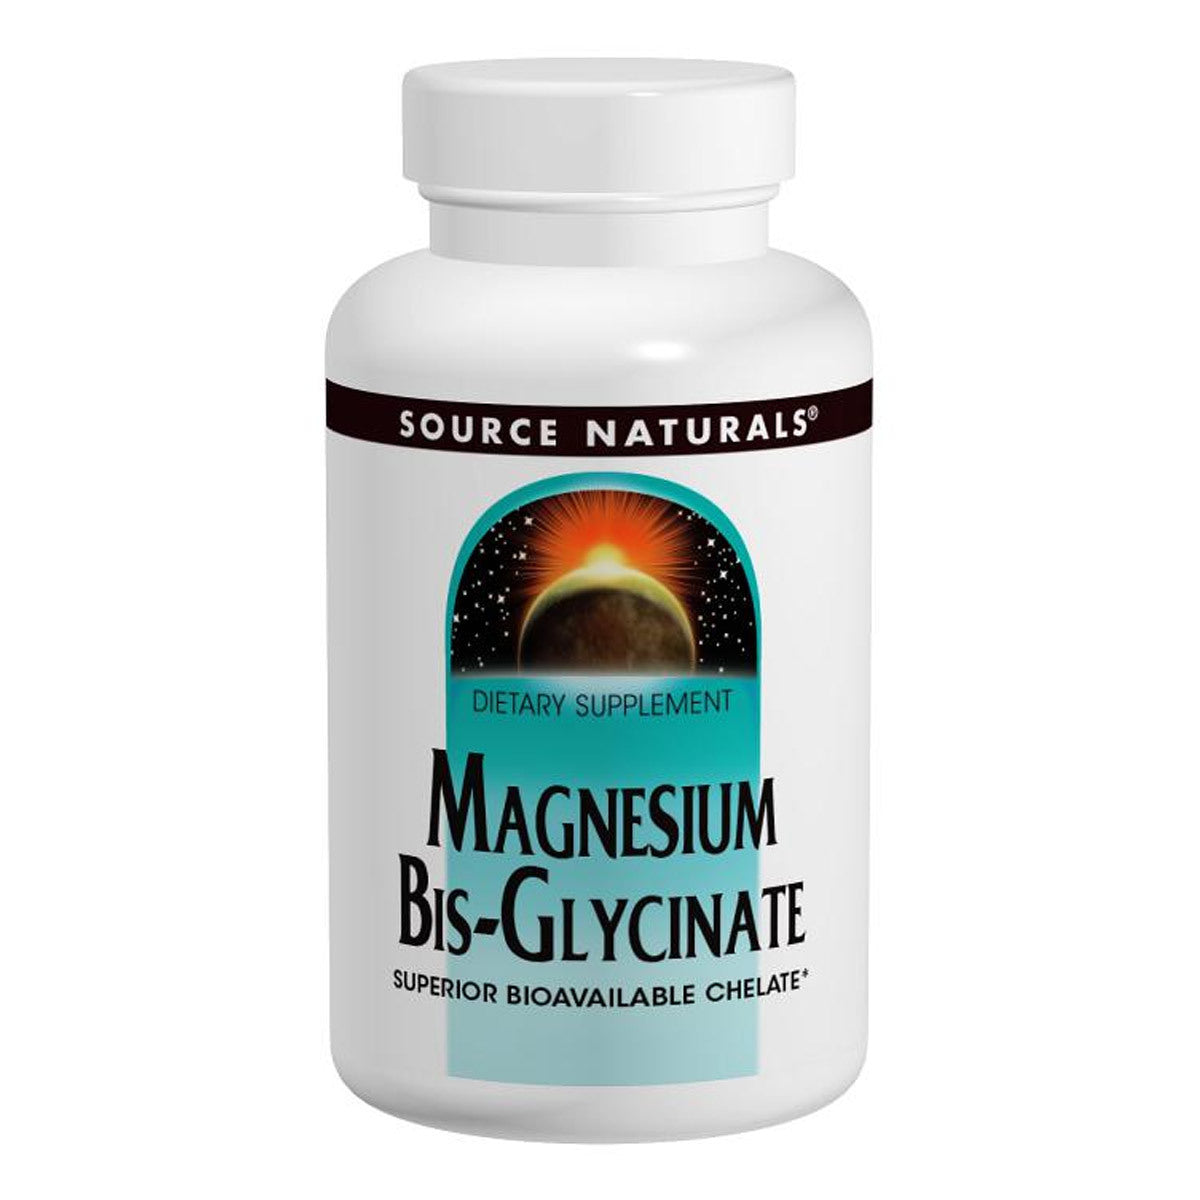 Primary image of Magnesium Bis-Glycinate